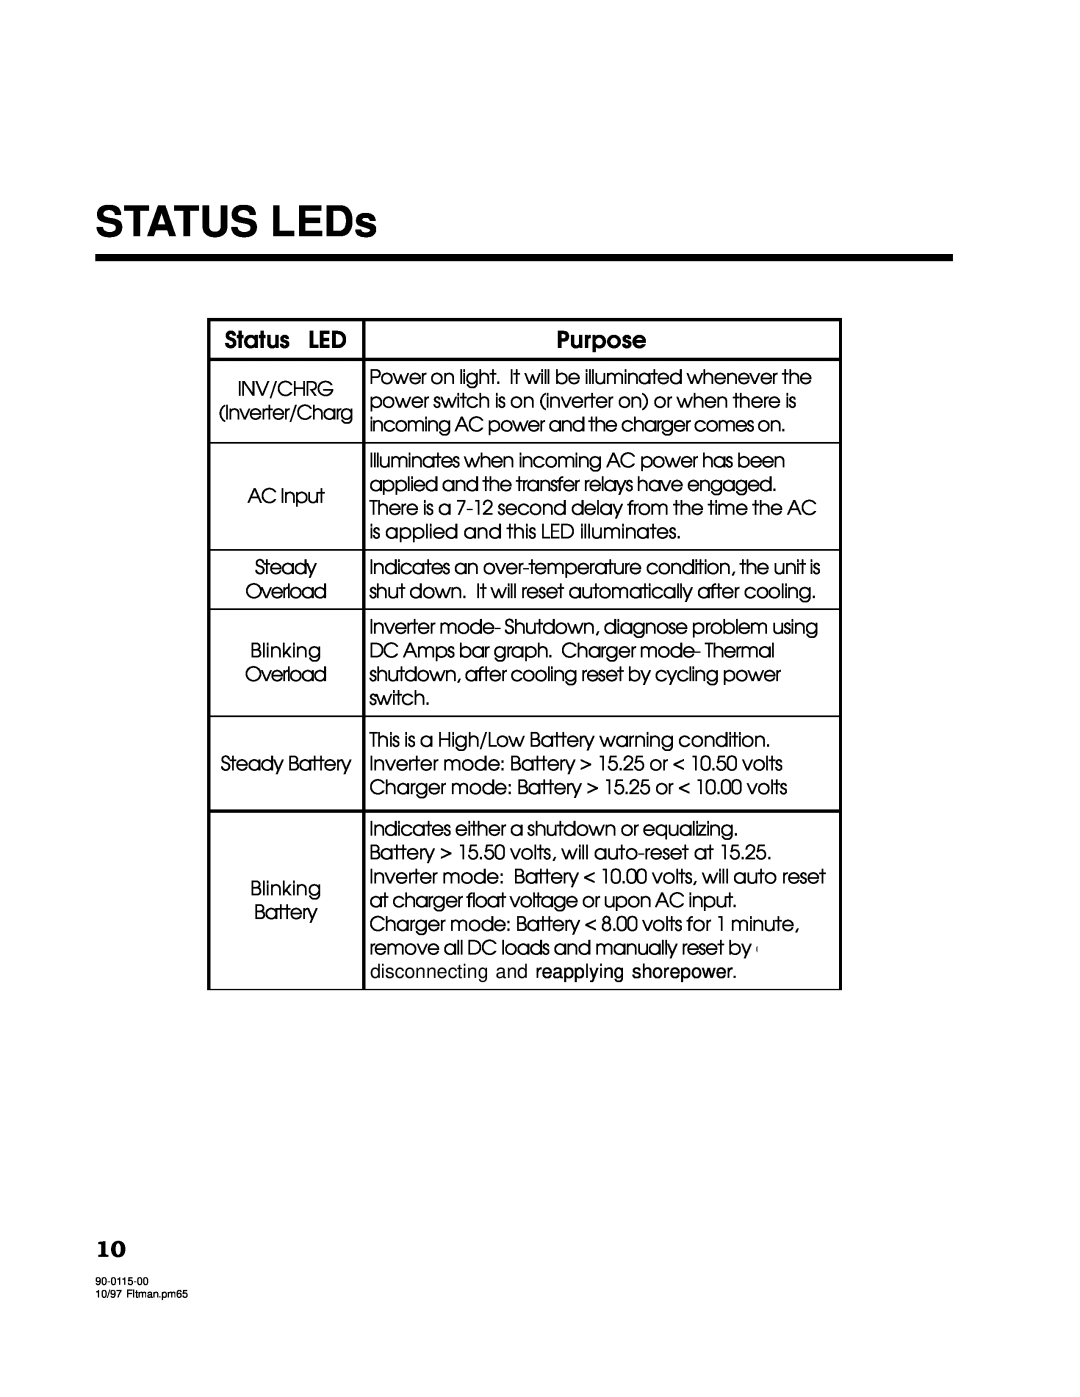 Xantrex Technology 2500, 2000 owner manual STATUS LEDs, Status LED, Purpose 